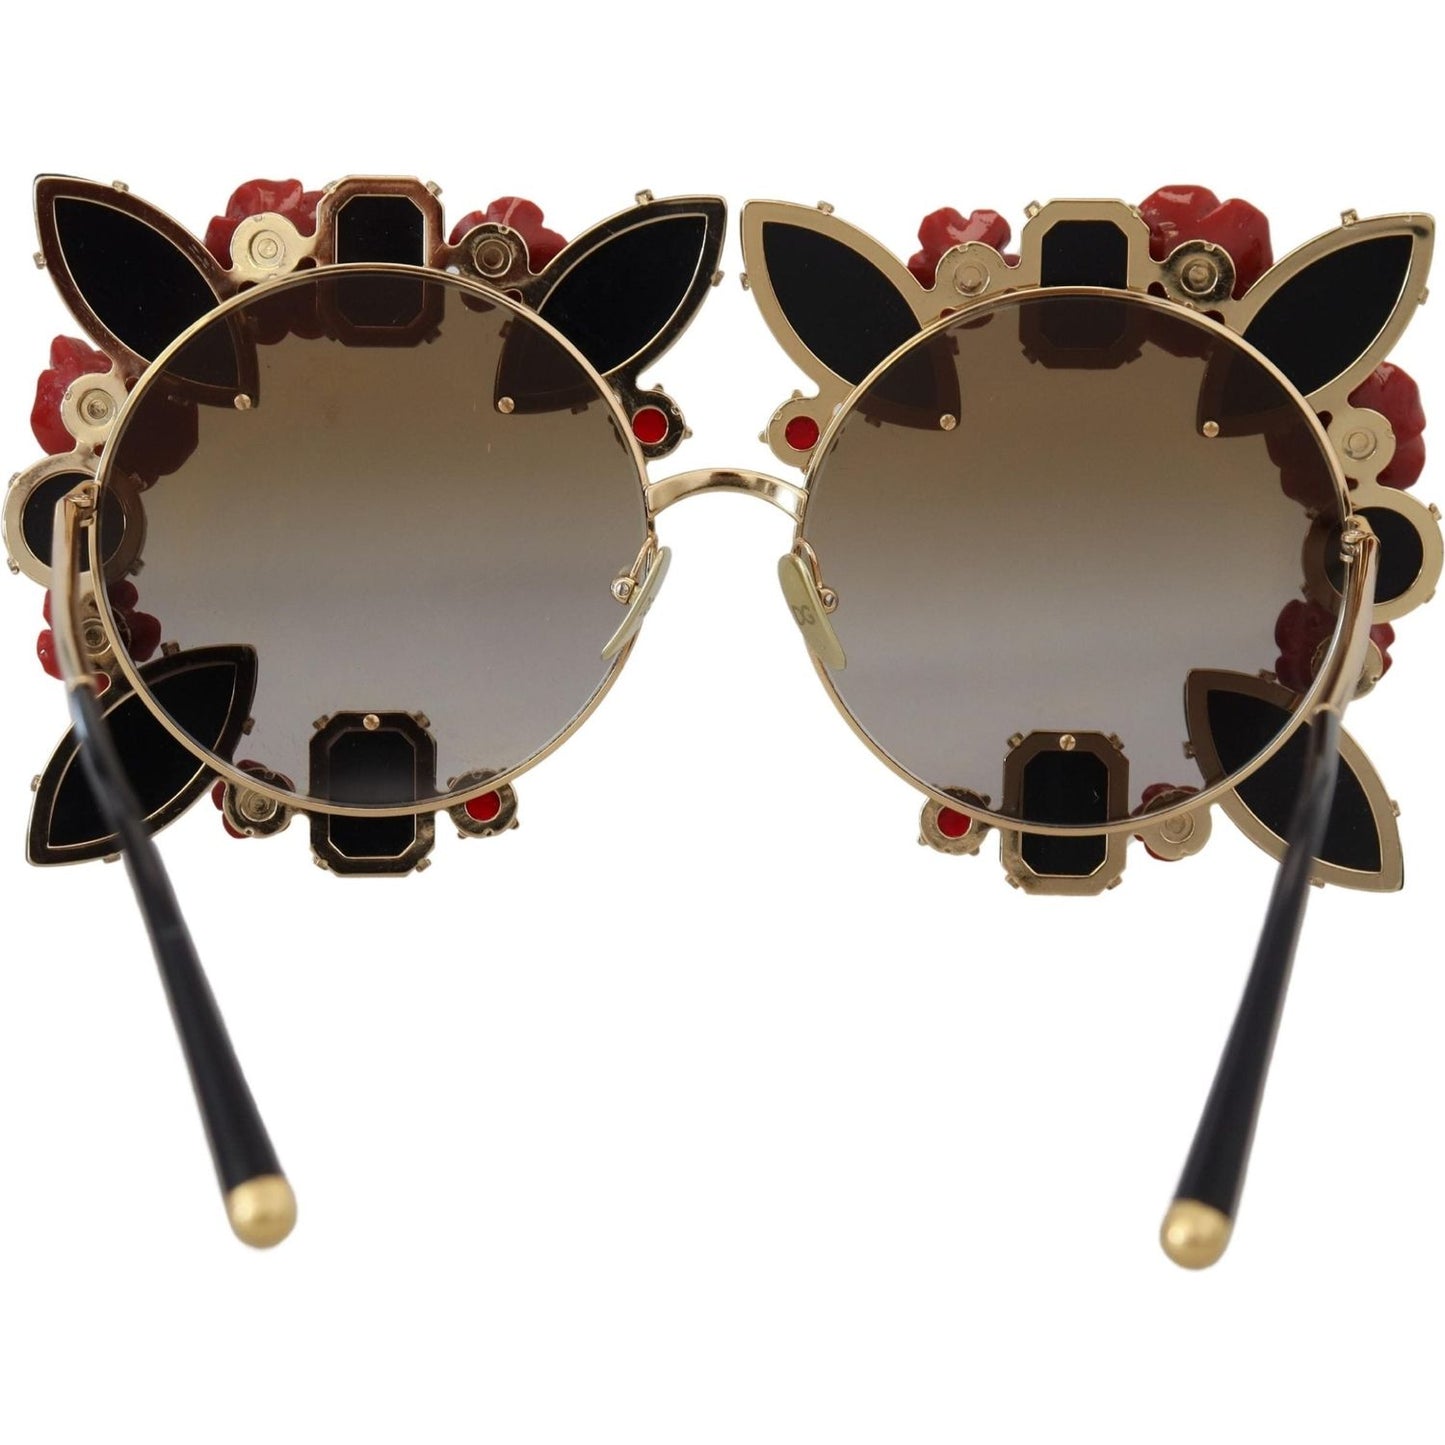 Dolce & Gabbana Elegant Round Rose-Embellished Sunglasses gold-metal-frame-roses-embellished-dg2207b-sunglasses IMG_1480-1-scaled-5cbc83c4-b80.jpg